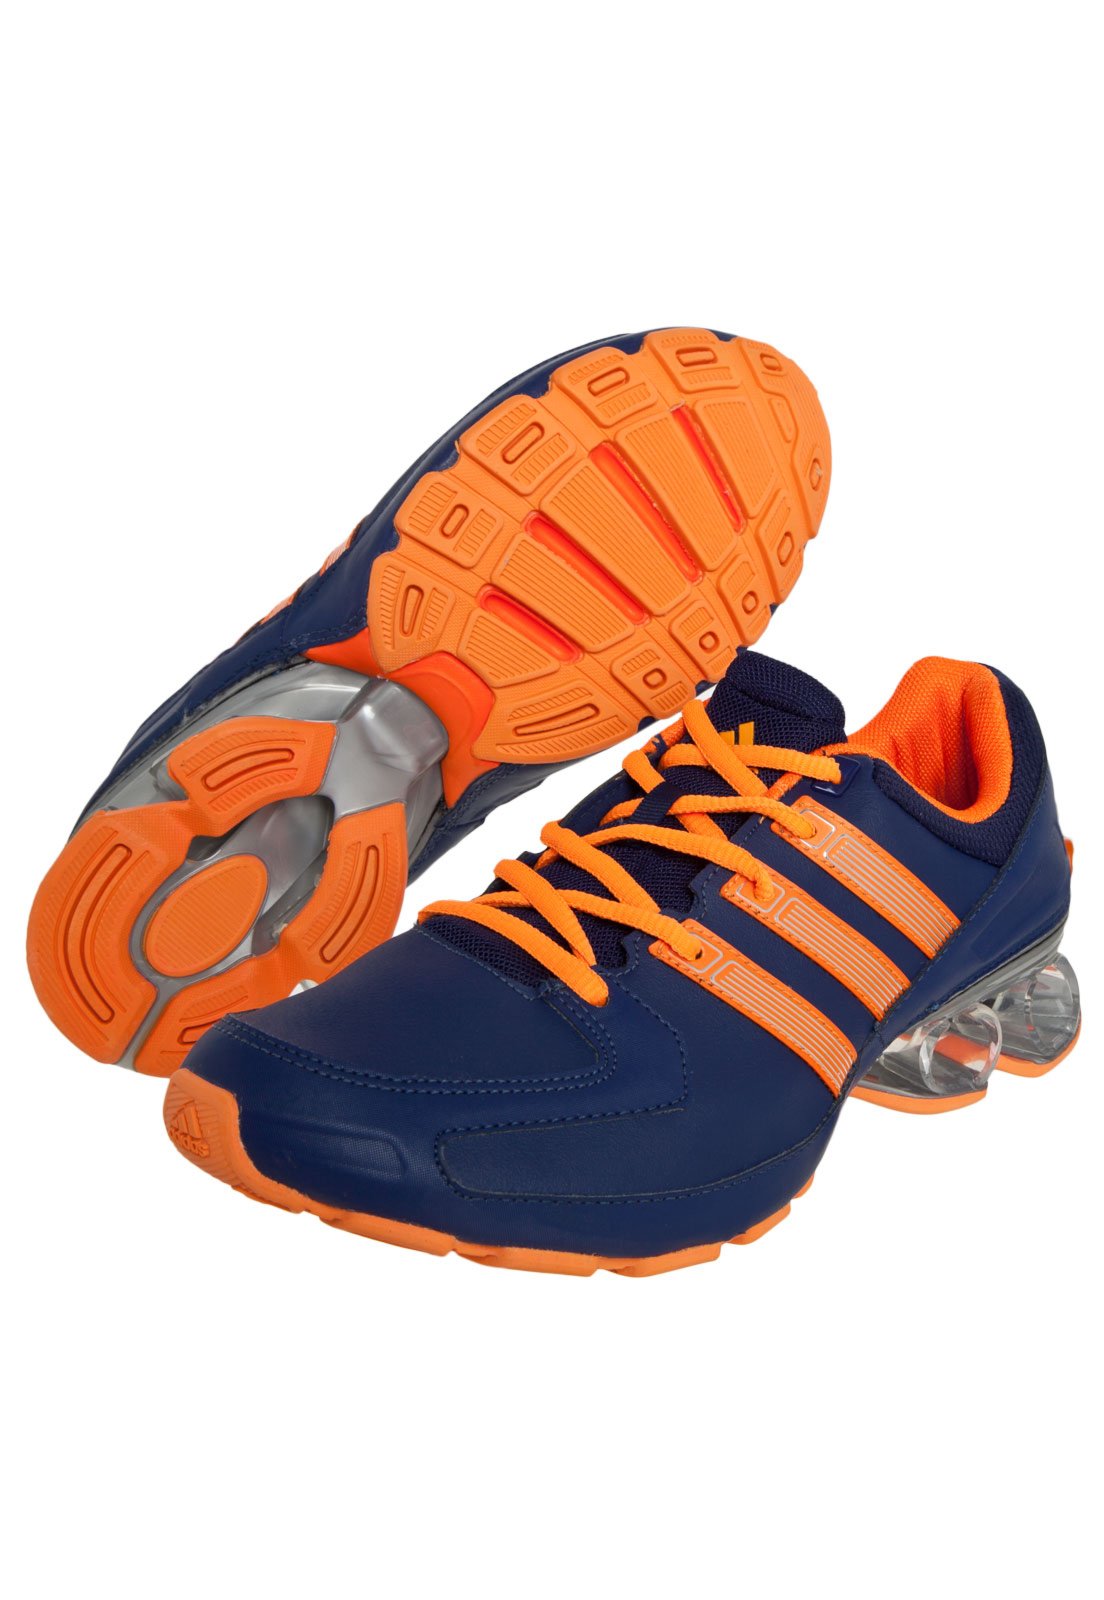 tenis adidas masculino azul e laranja